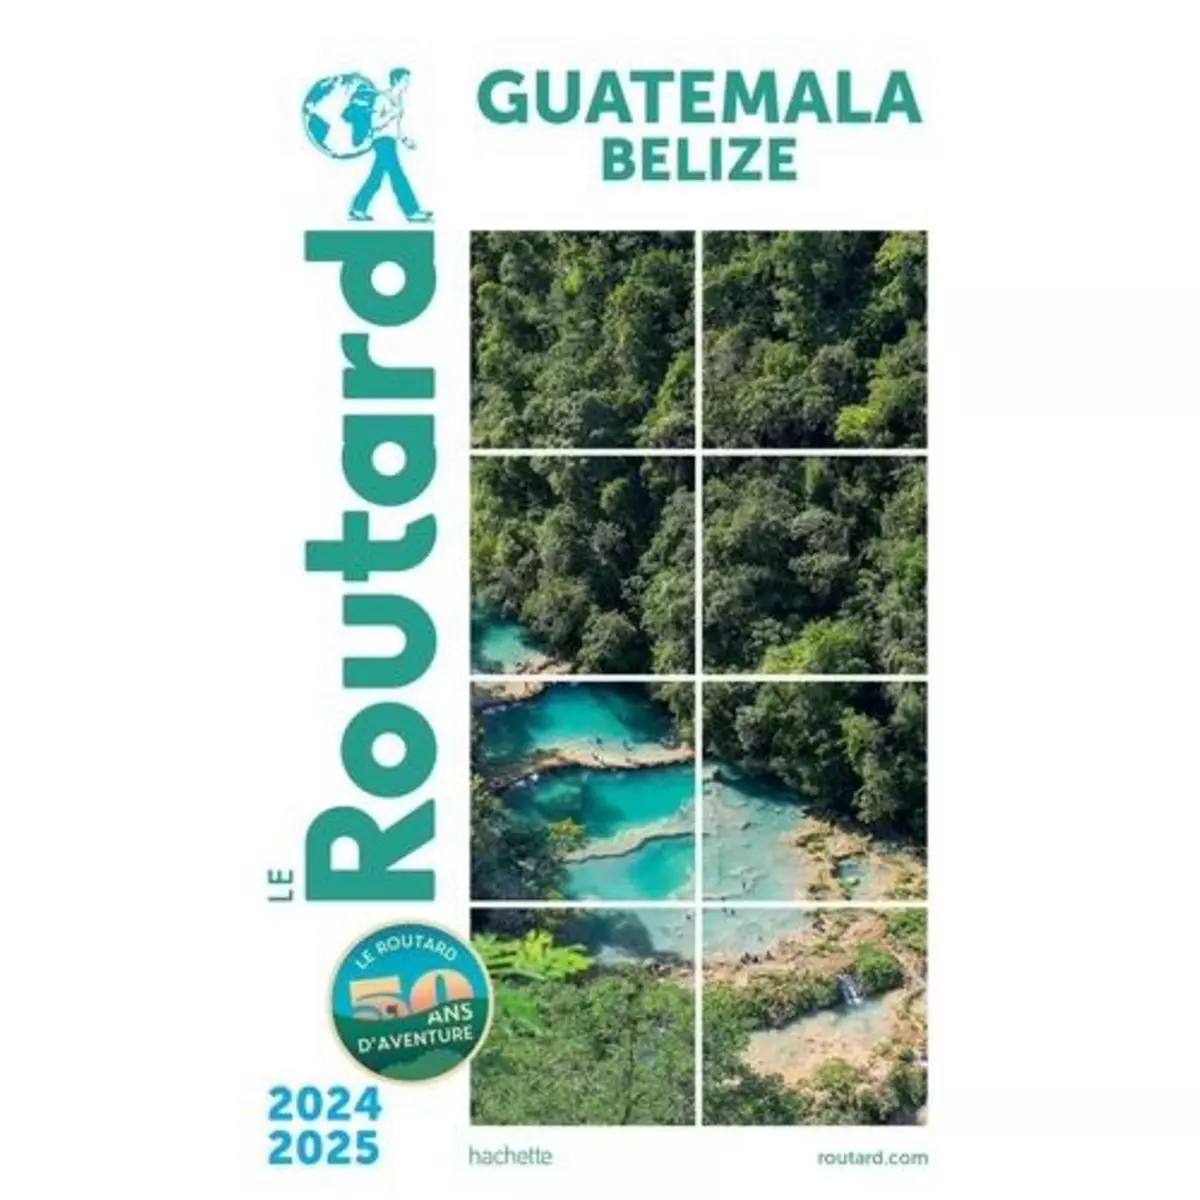  GUATEMALA, BELIZE. EDITION 2024-2025, Le Routard